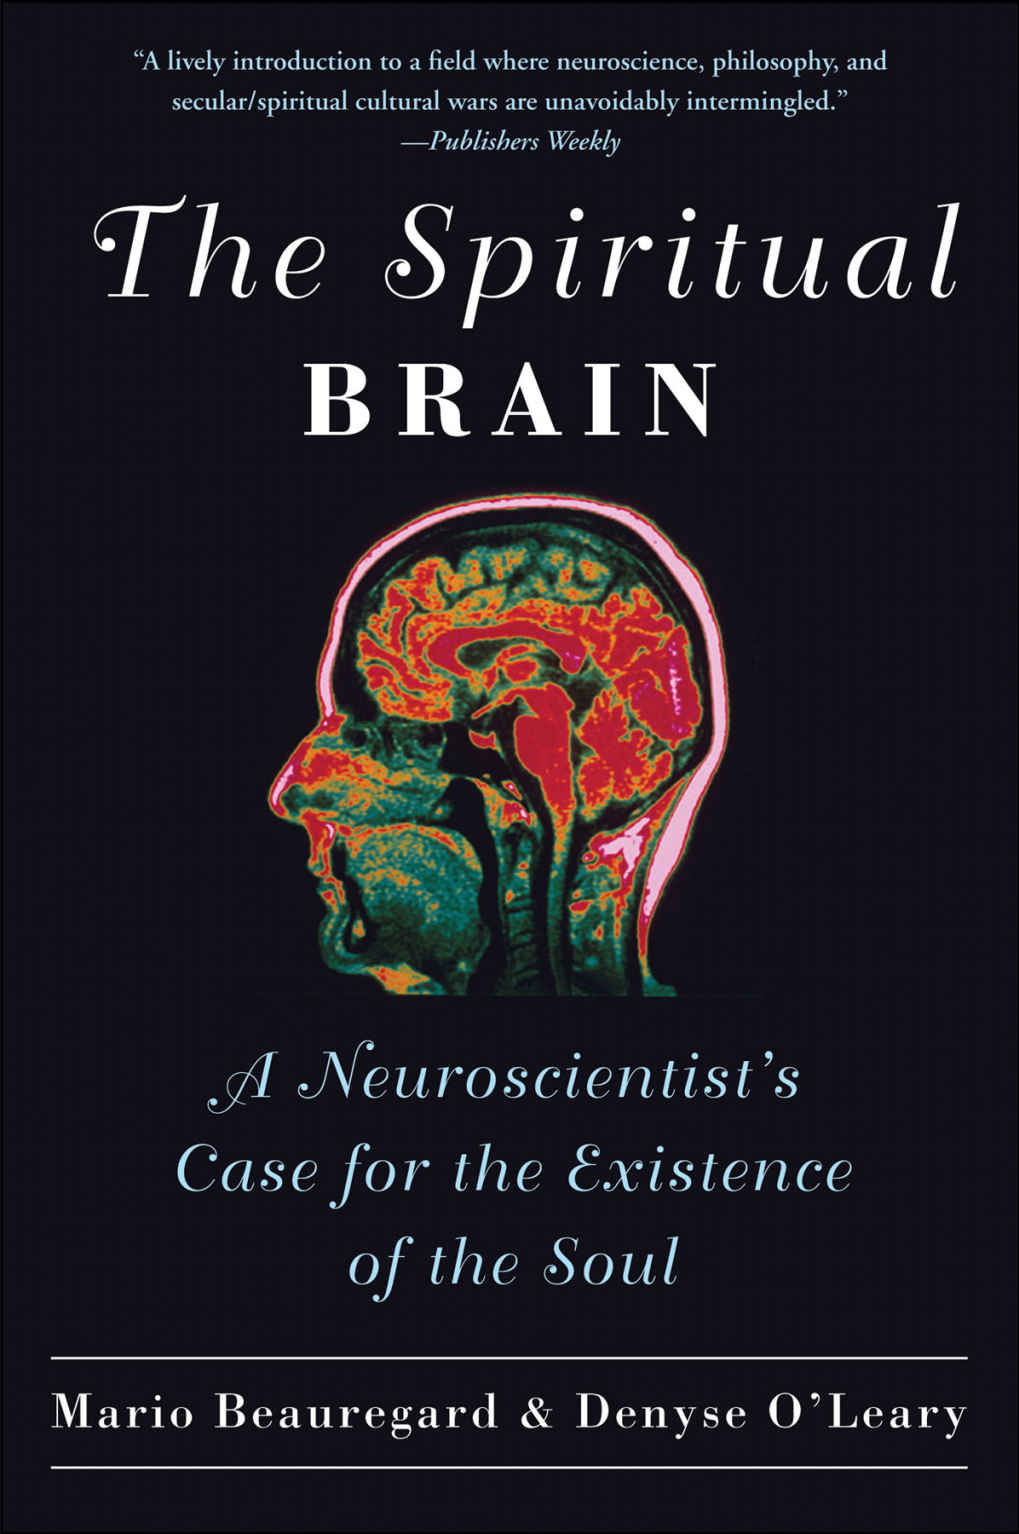 The Spiritual Brain by Beauregard and O'Leary